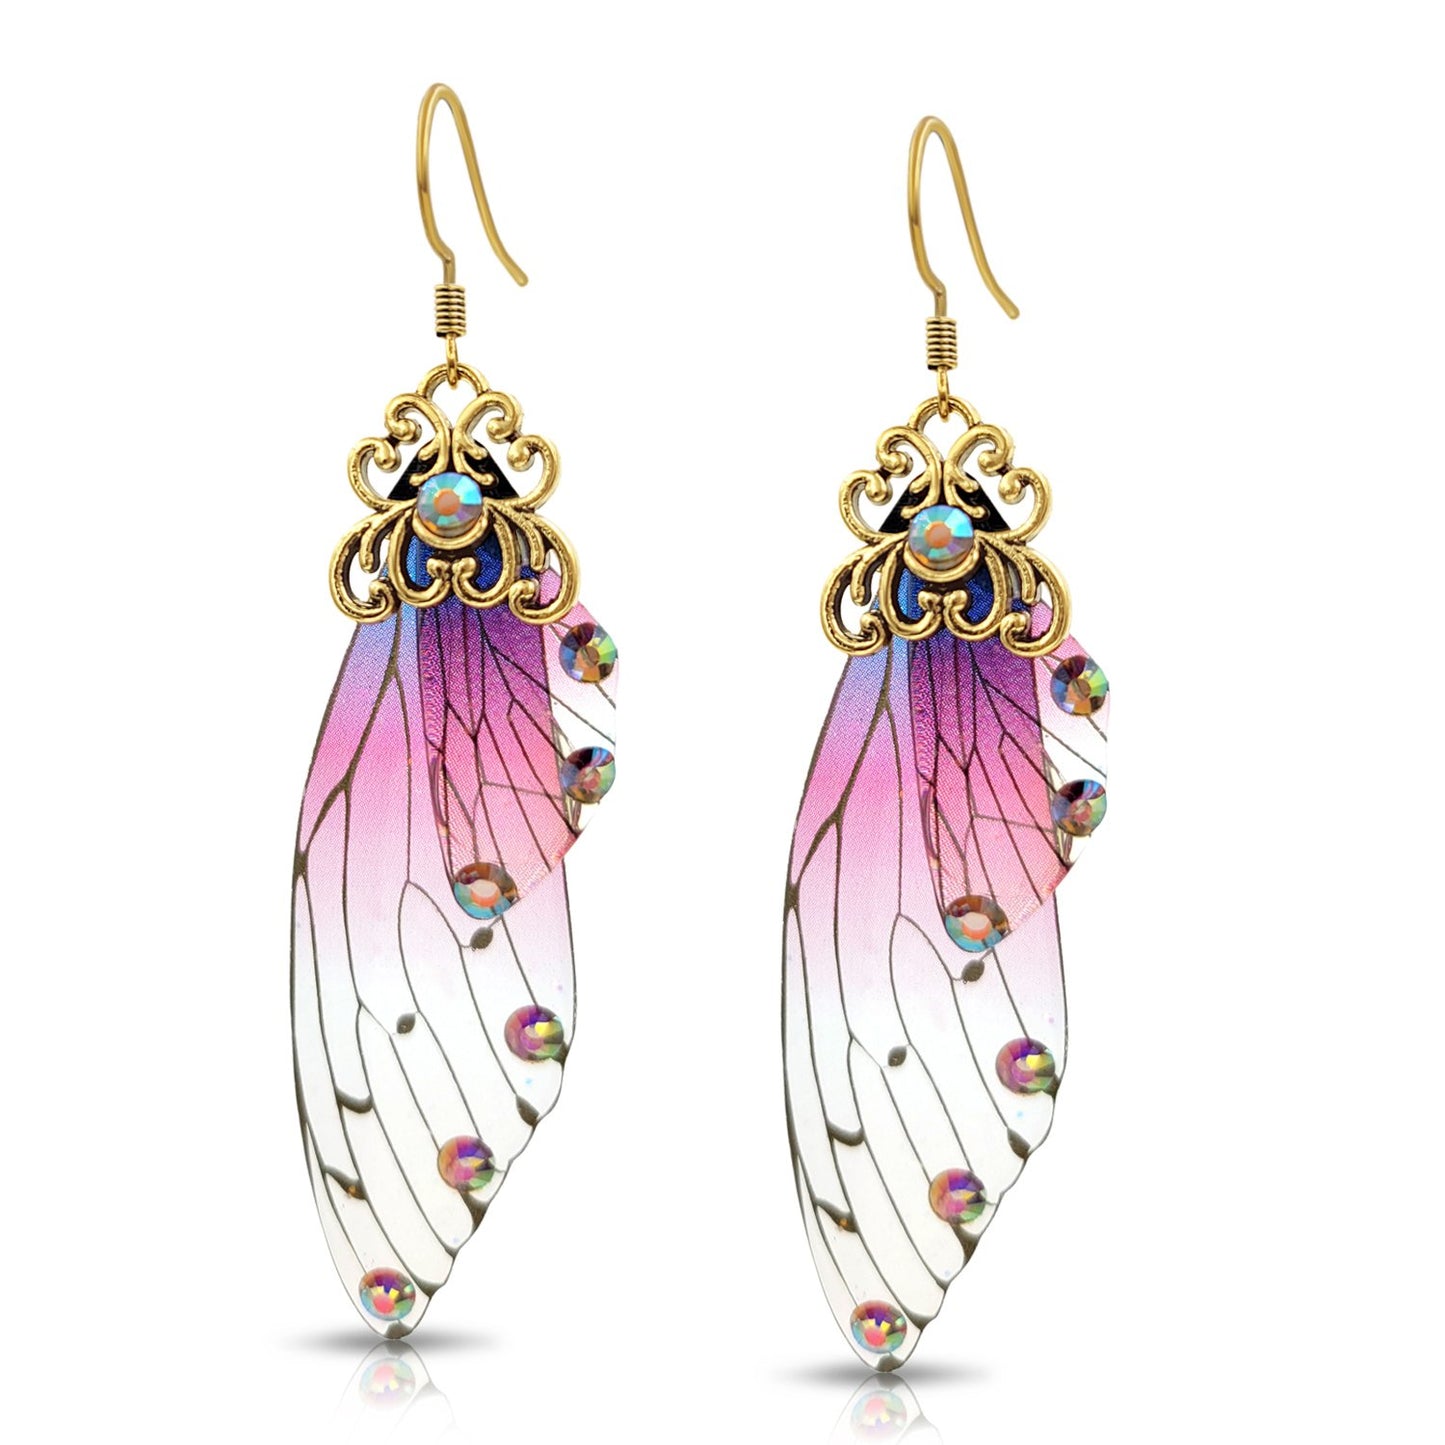 BESHEEK Clear, Pink and Purple with gold flecks Butterfly Wing Resin Earrings | Handmade Hypoallergenic Boho Beach Gala Wedding Style Fashion Earrings